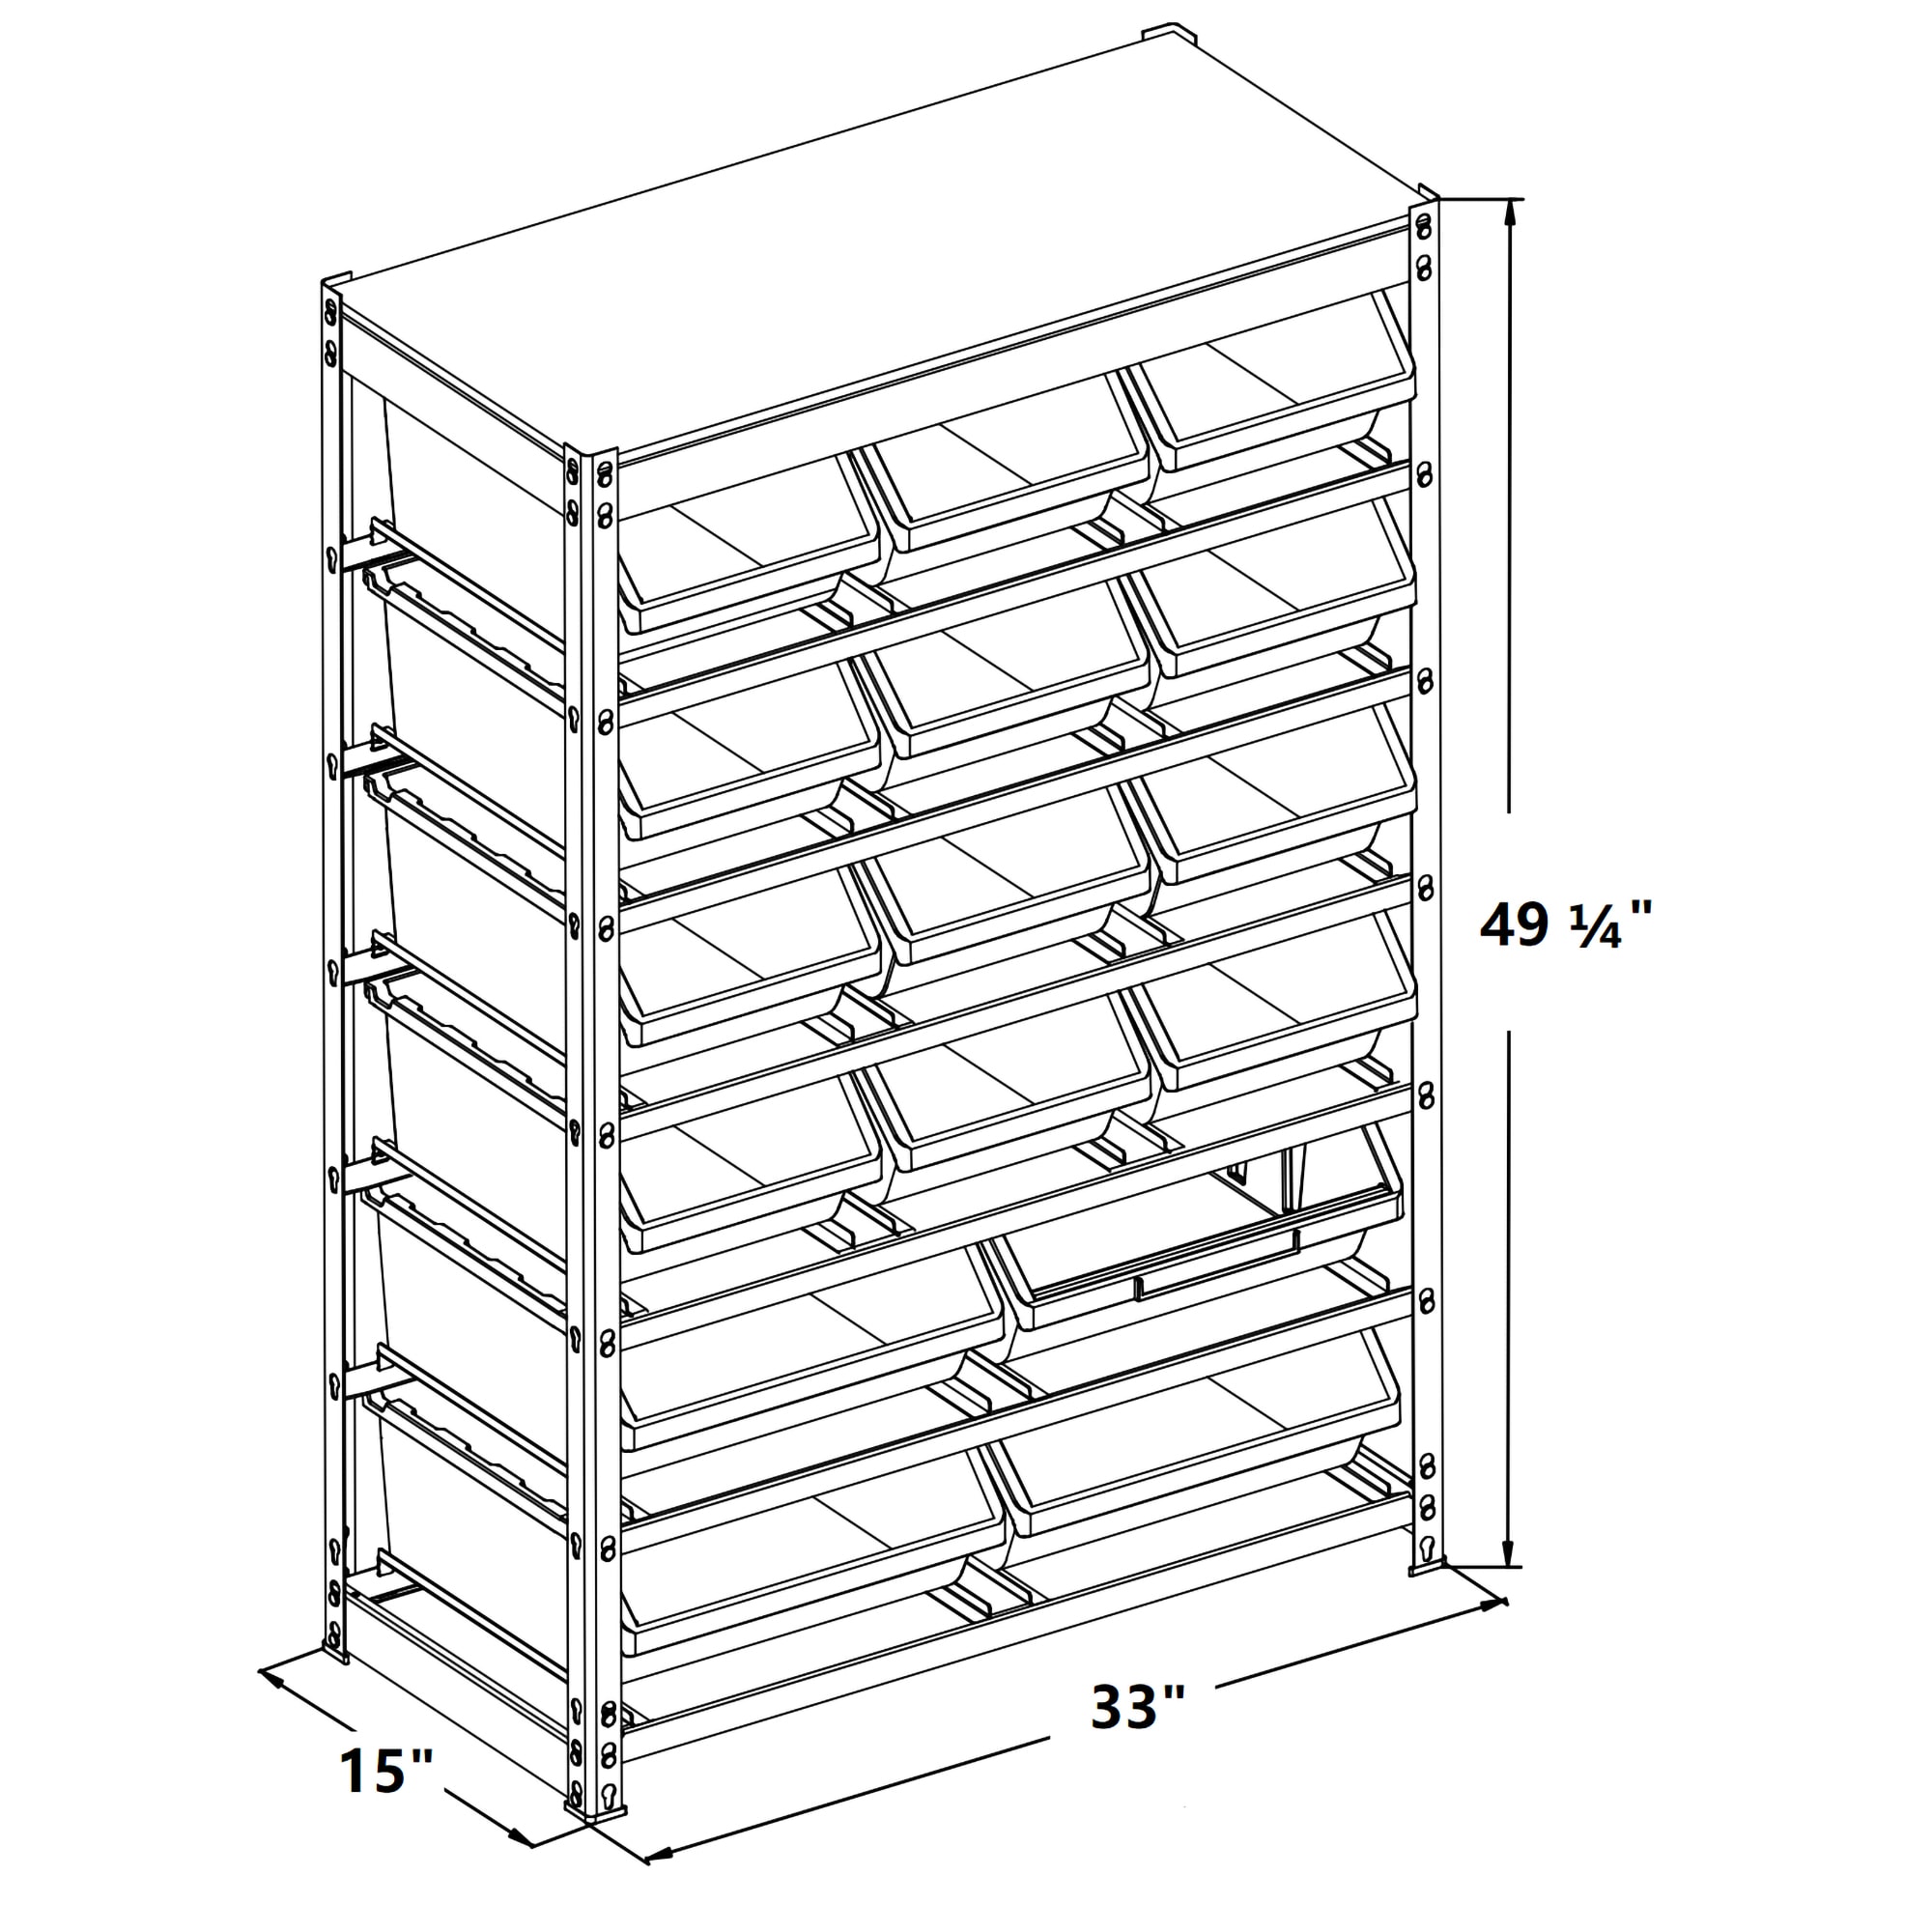 KING'S RACK Bin Storage System Organizer w/ 15 Plastic Bins in 3 tiers